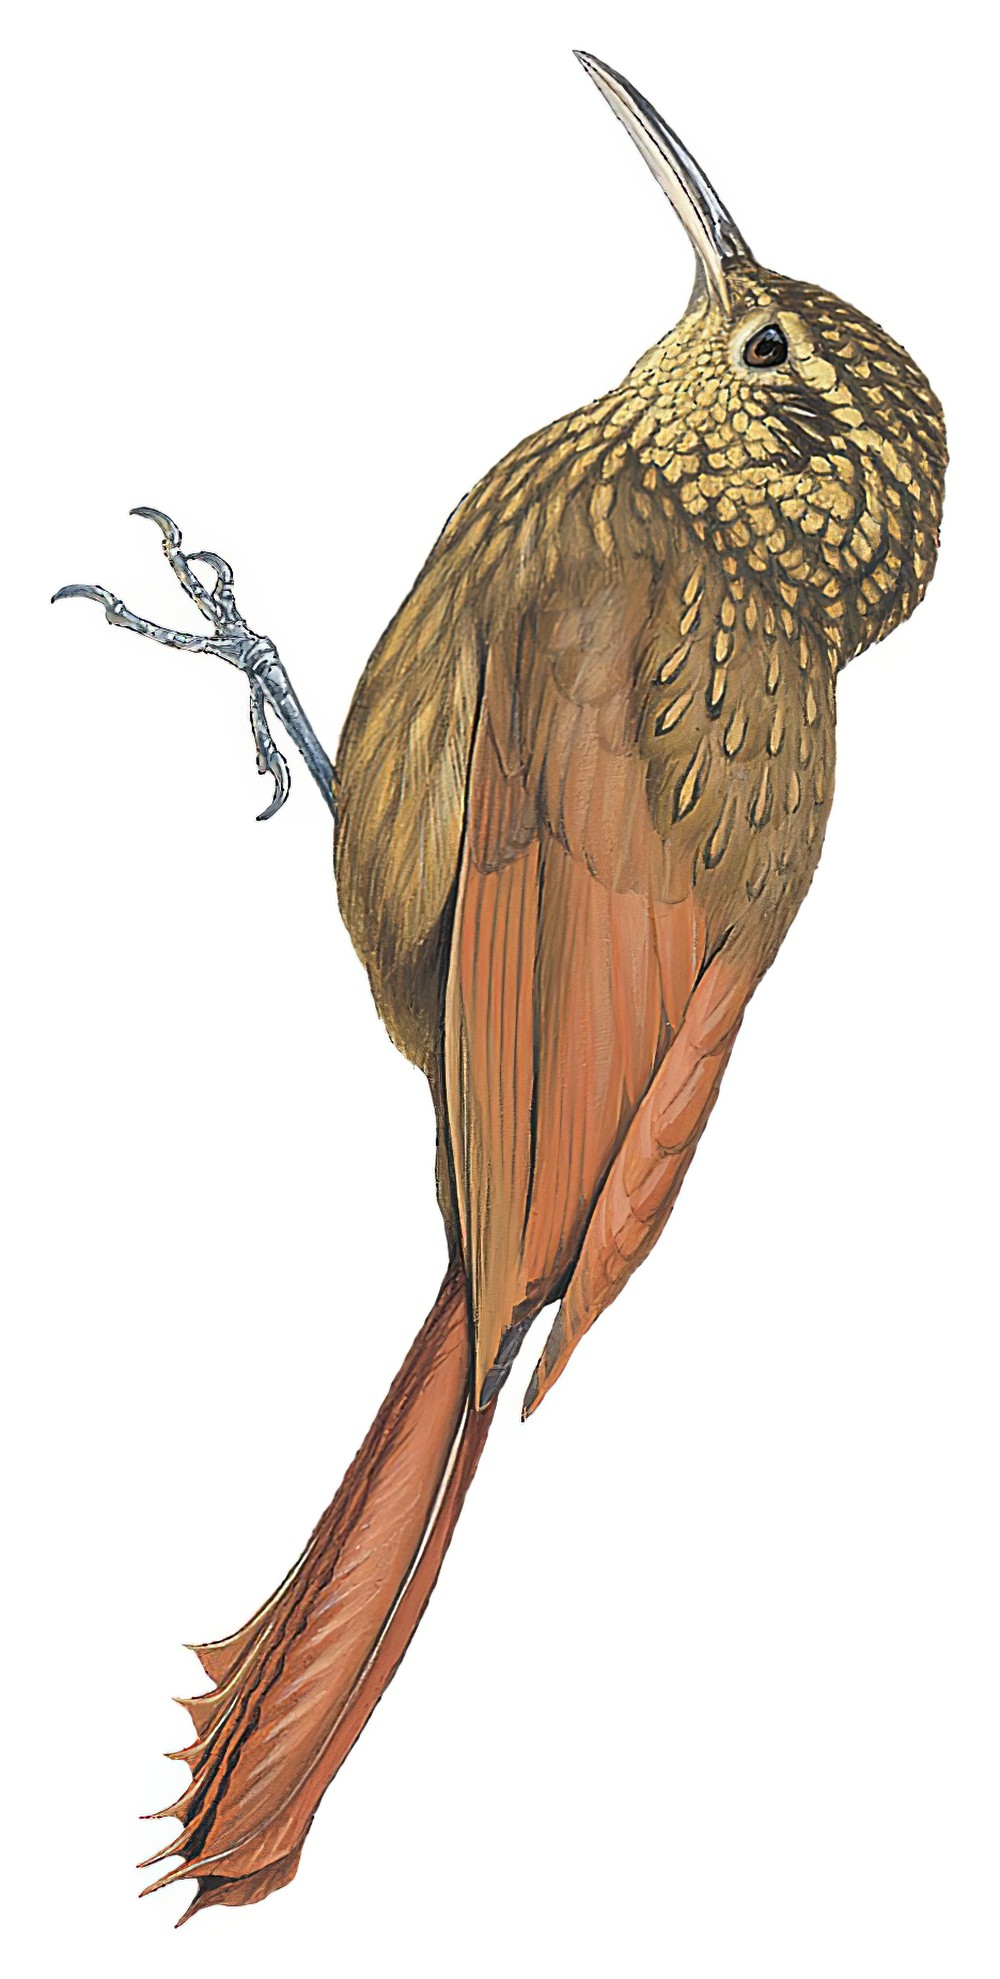 Ceara Woodcreeper / Xiphorhynchus atlanticus